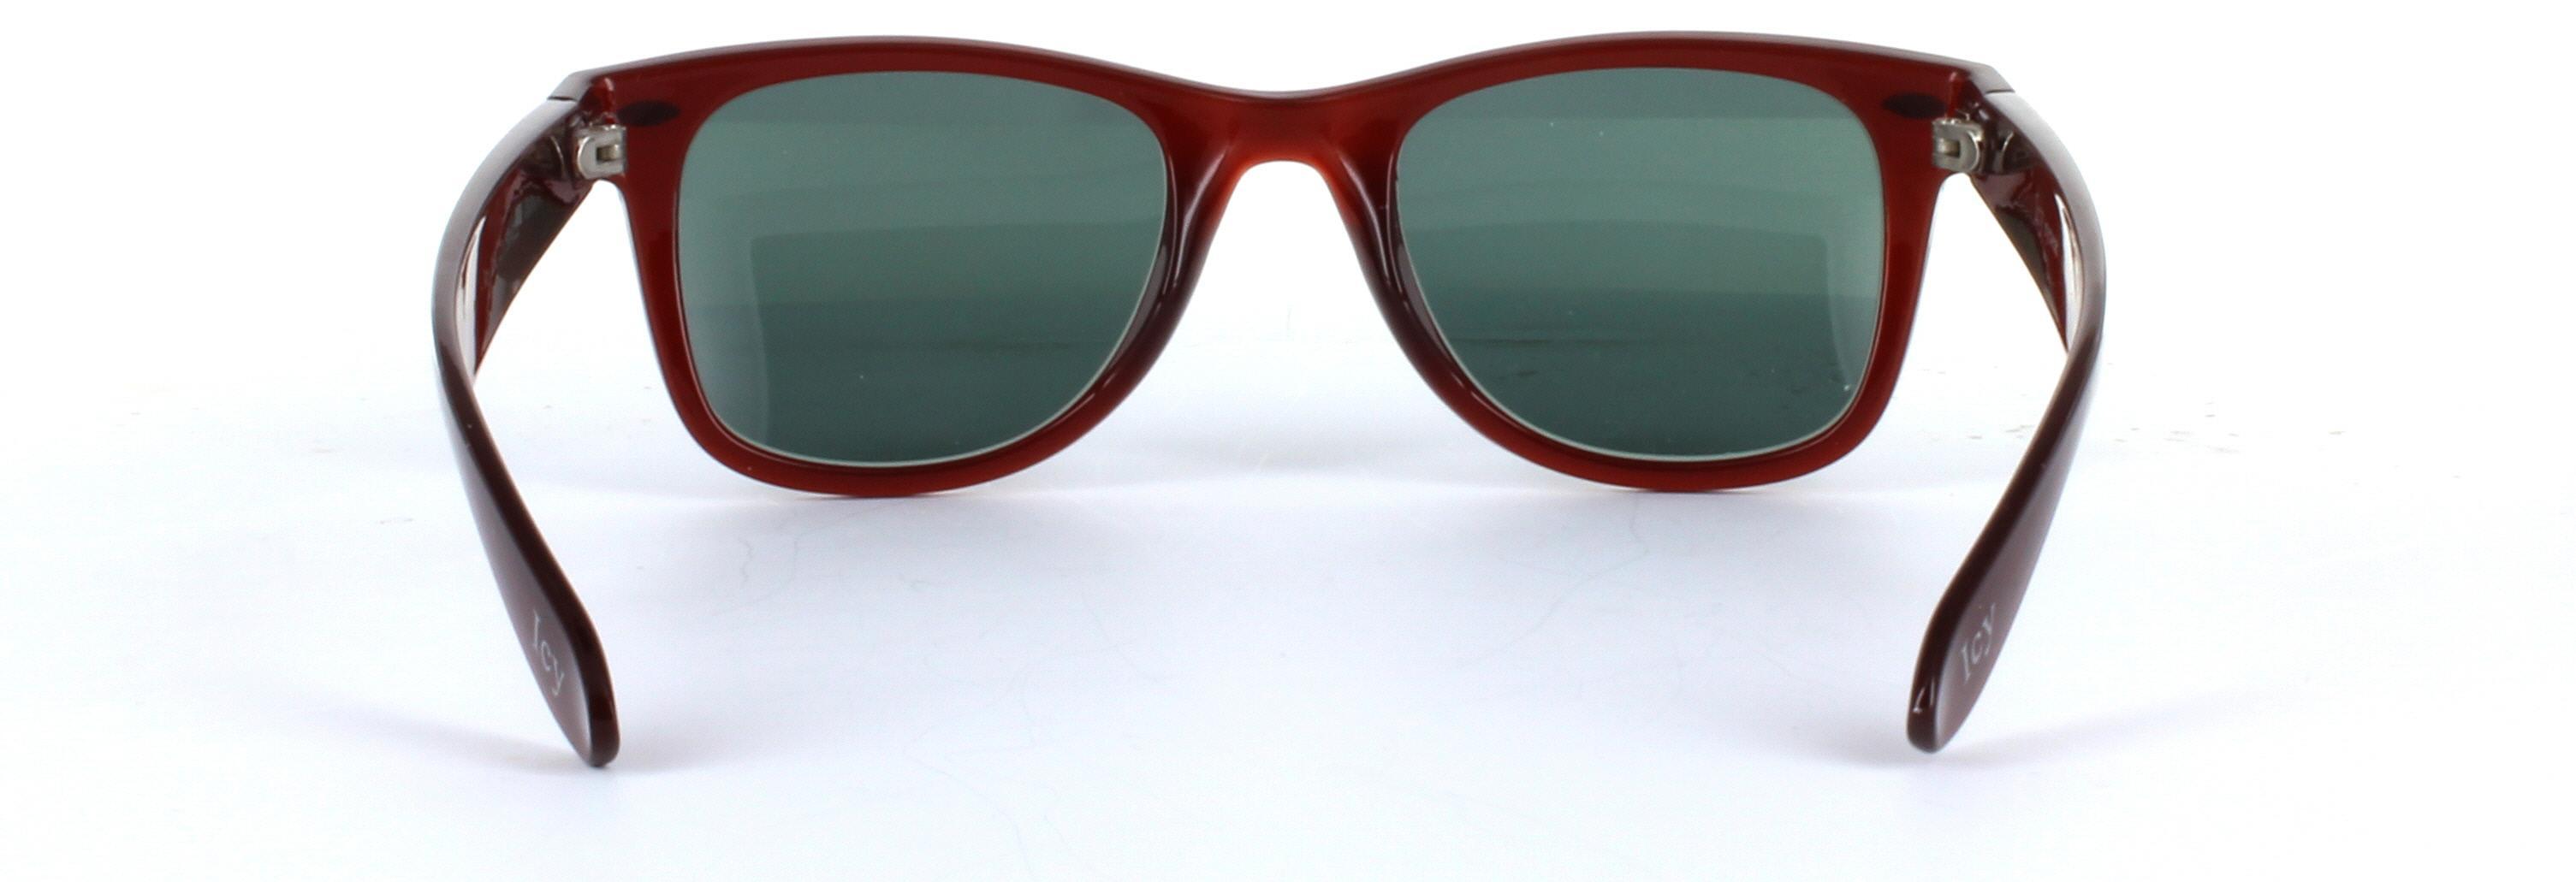 England Brown Full Rim Oval Plastic Prescription Sunglasses - Image View 3